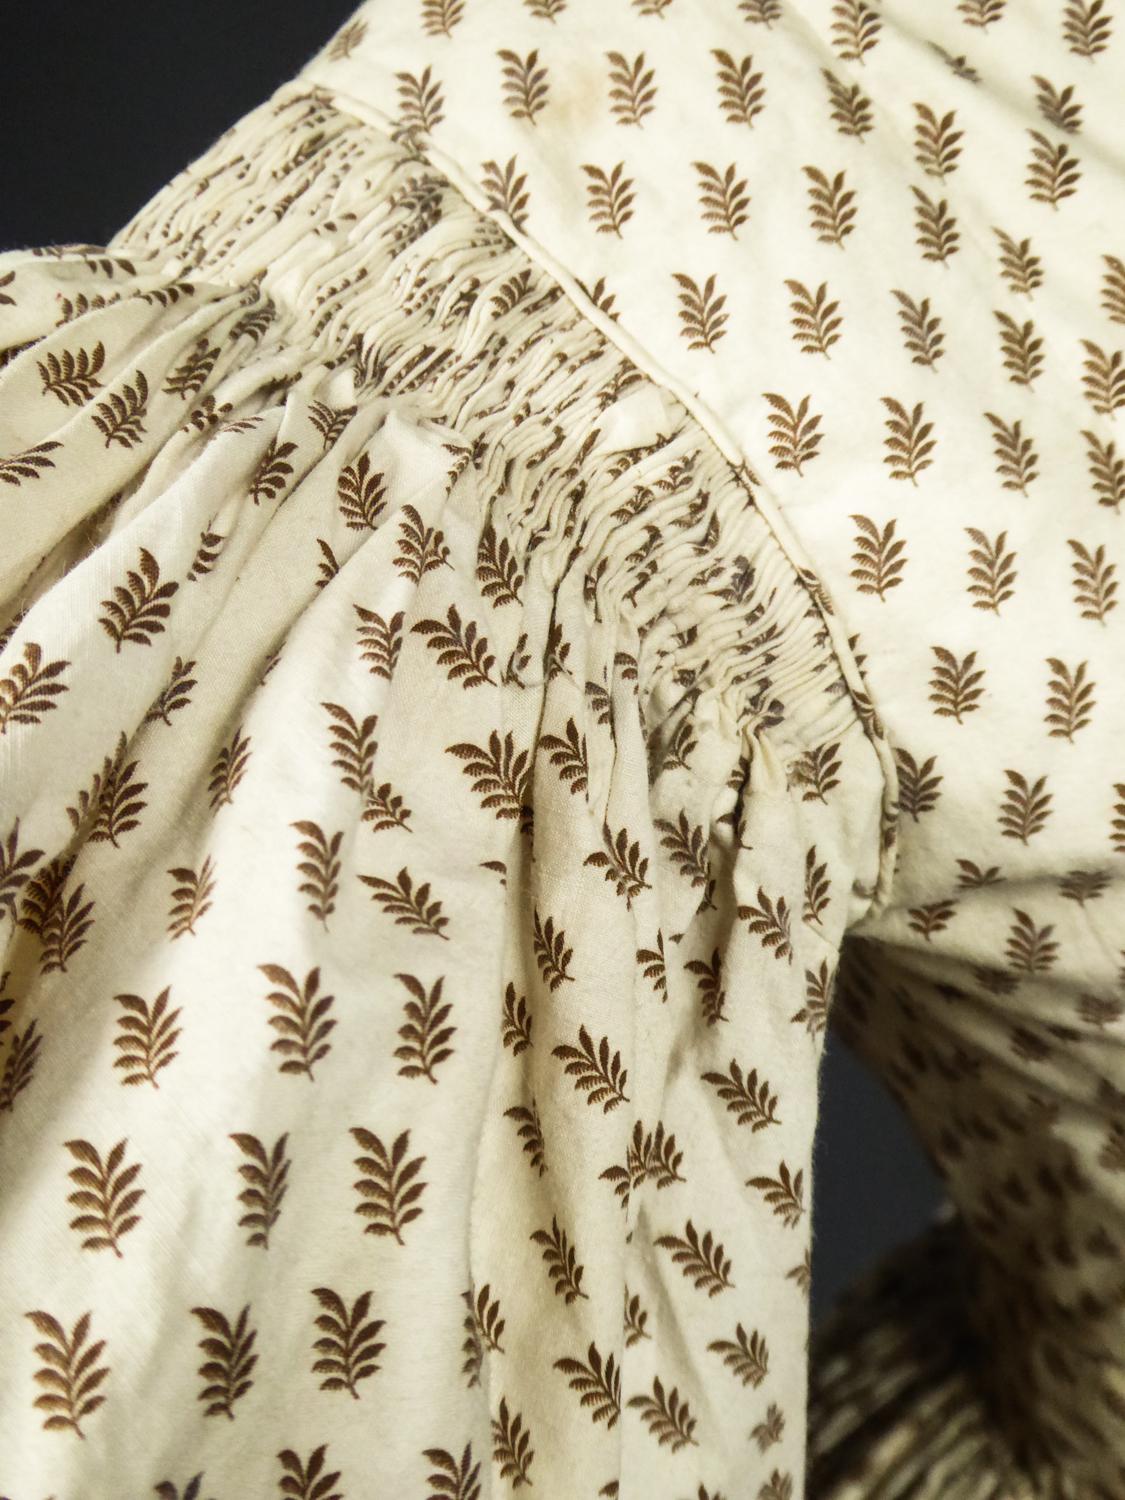 A French Romantic Era Printed Cotton Day Dress Circa 1830 1